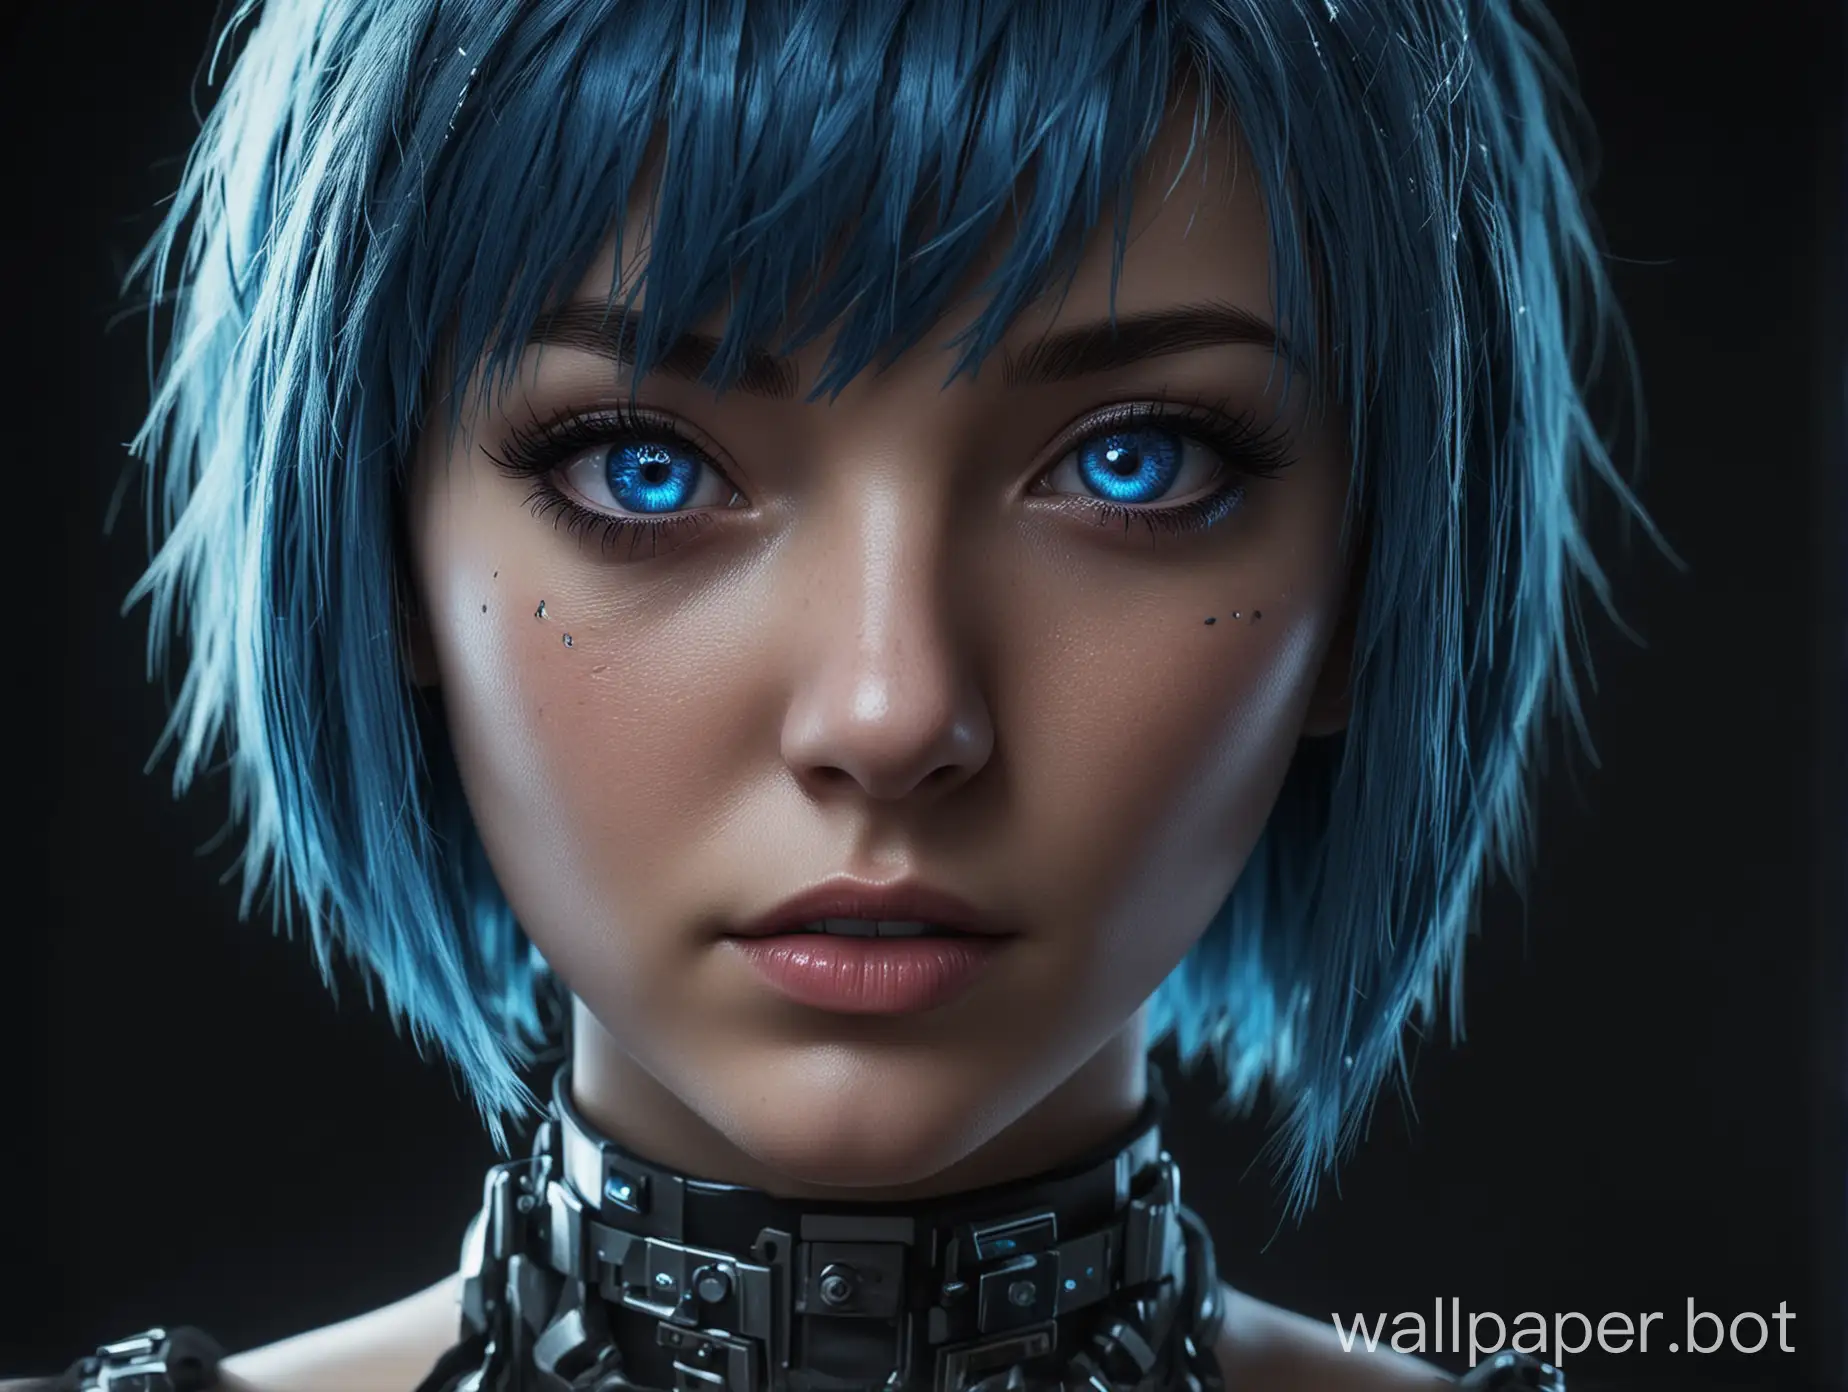 Futuristic-Cyber-Girl-with-Blue-Hair-in-Cyberpunk-Environment